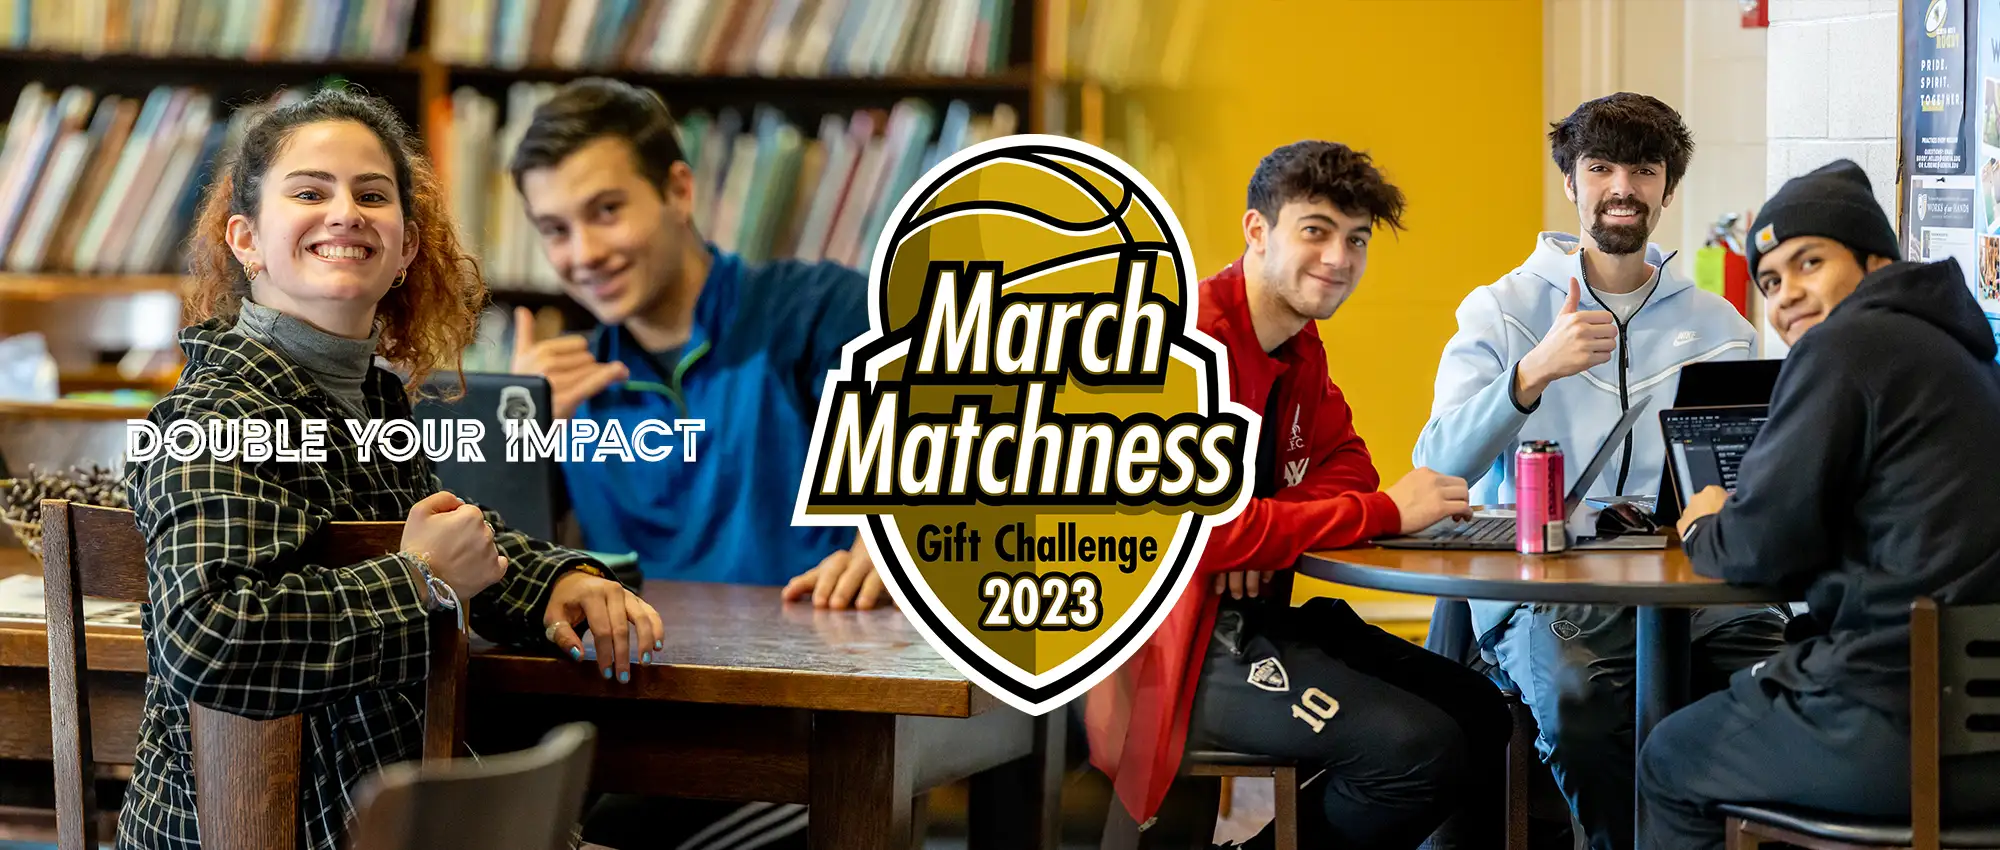 March Matchness 2023